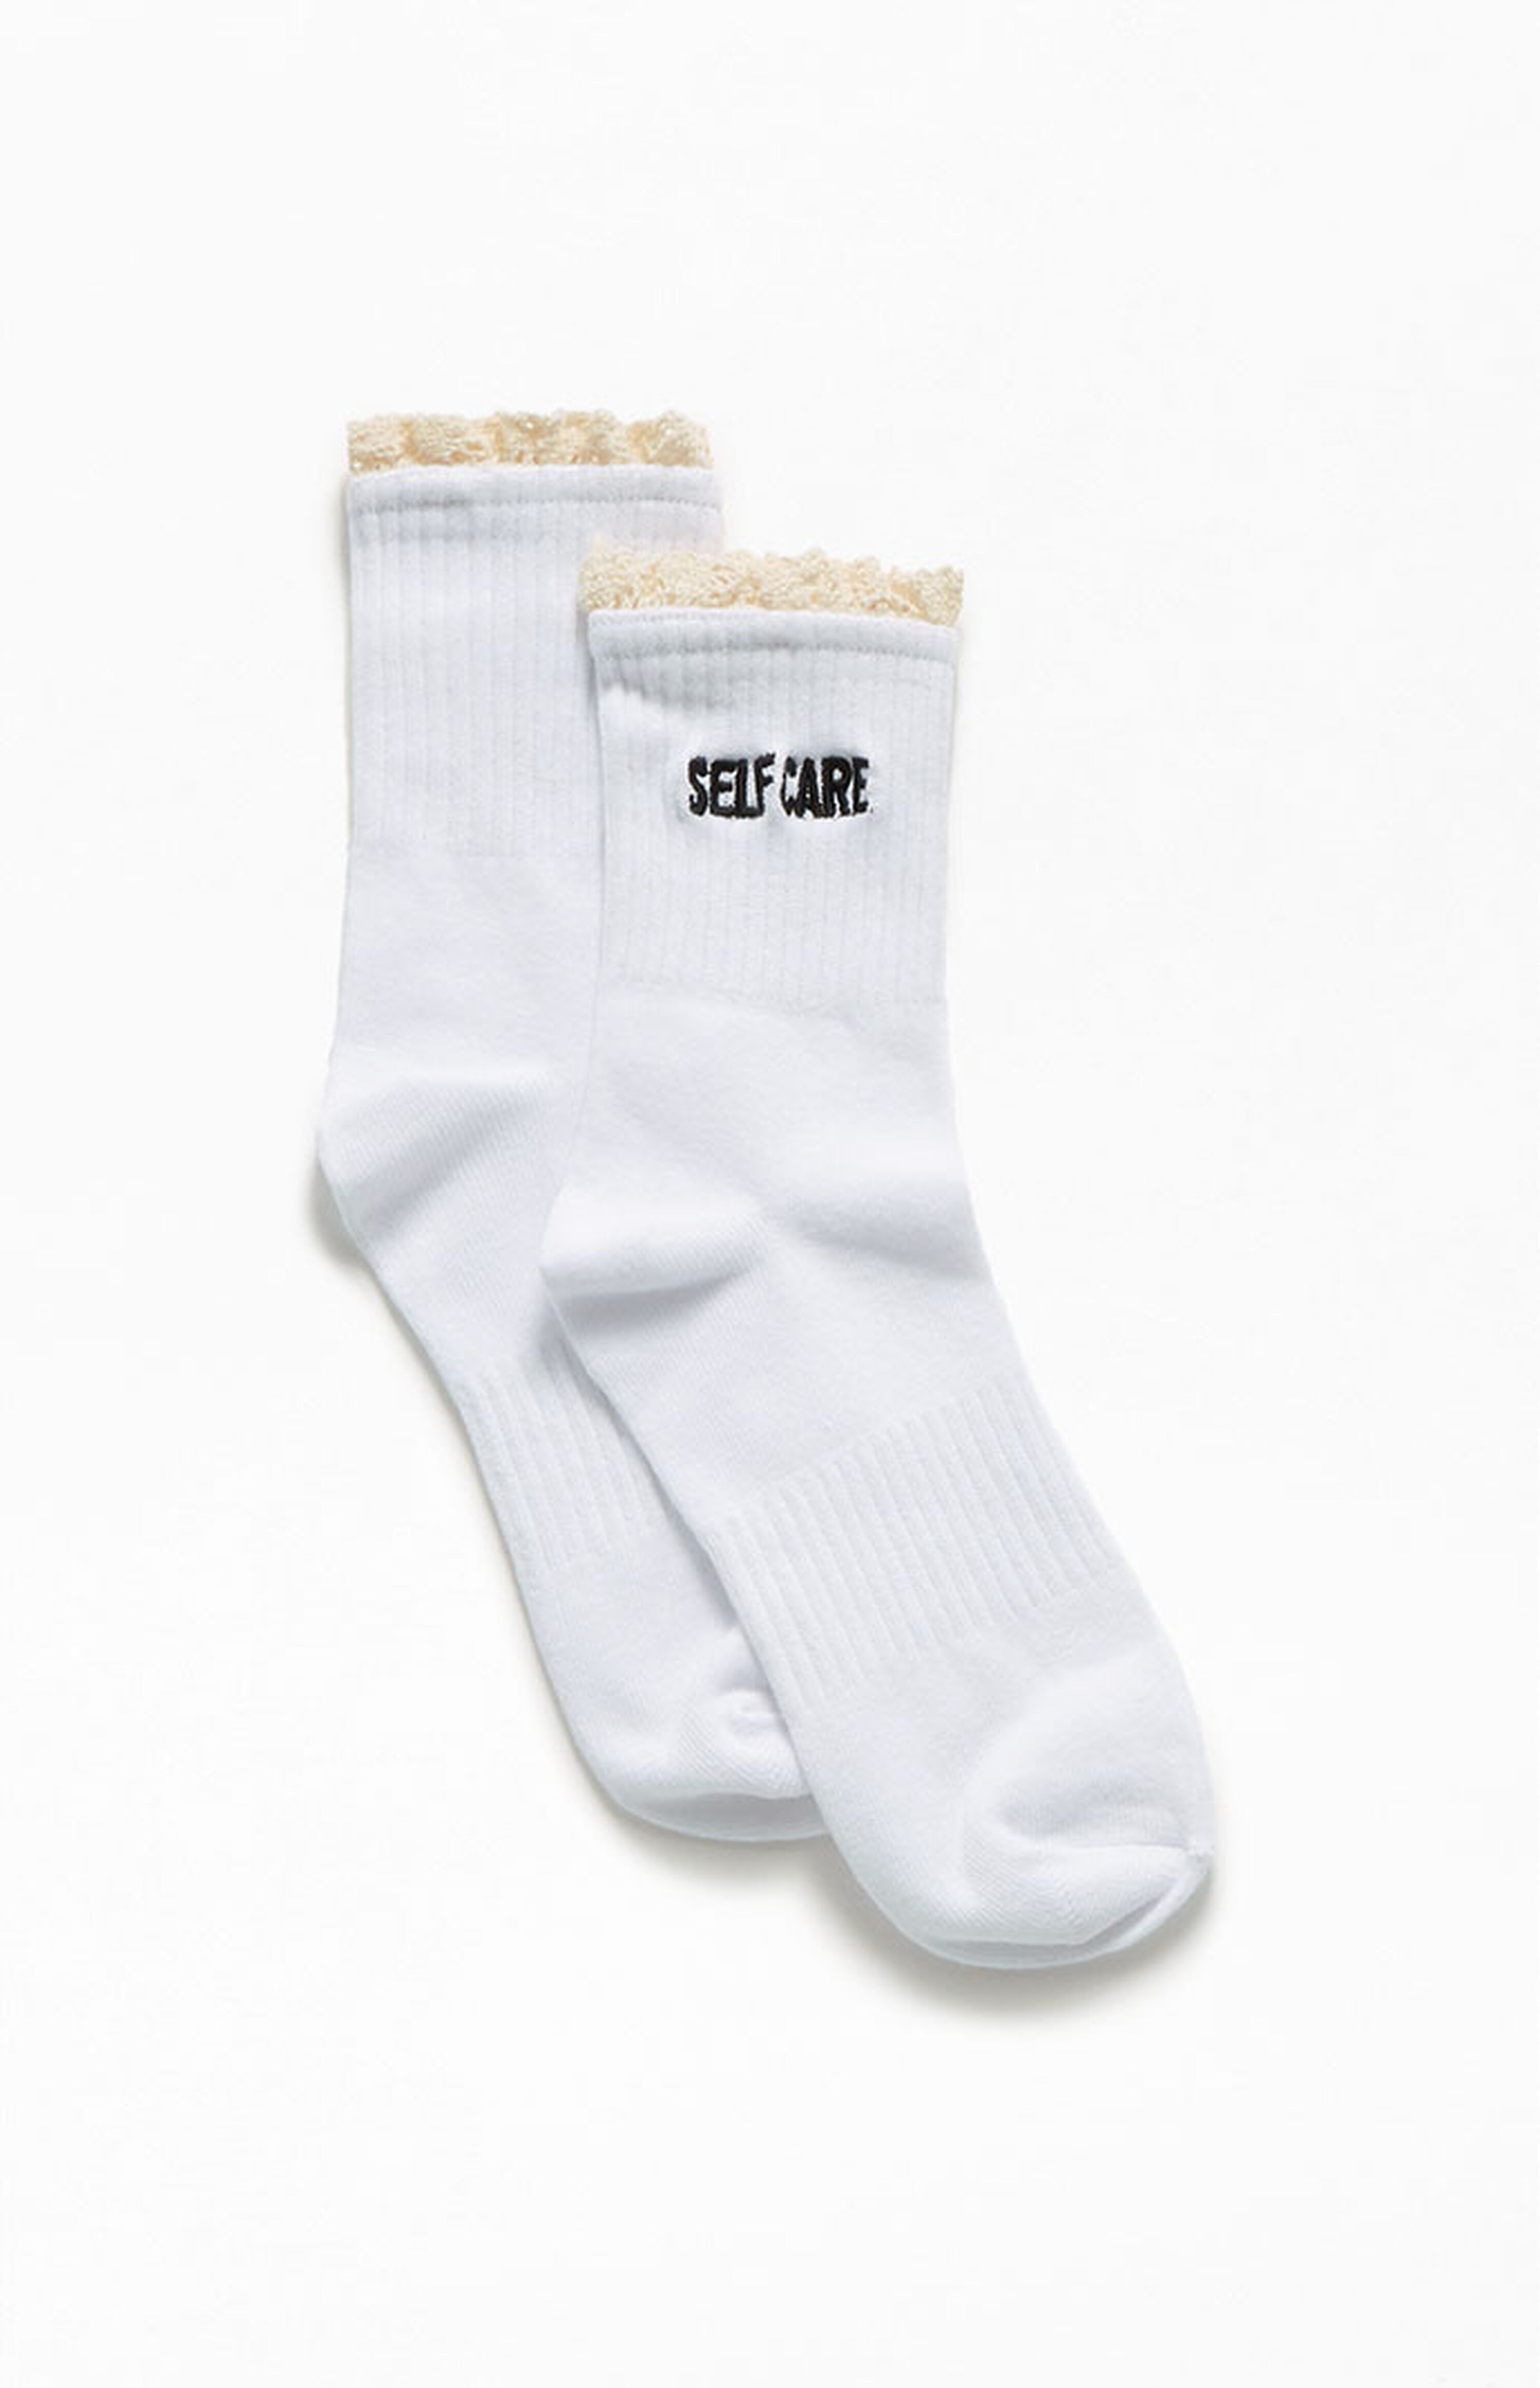 PacSun Self Care Ruffle Socks | PacSun